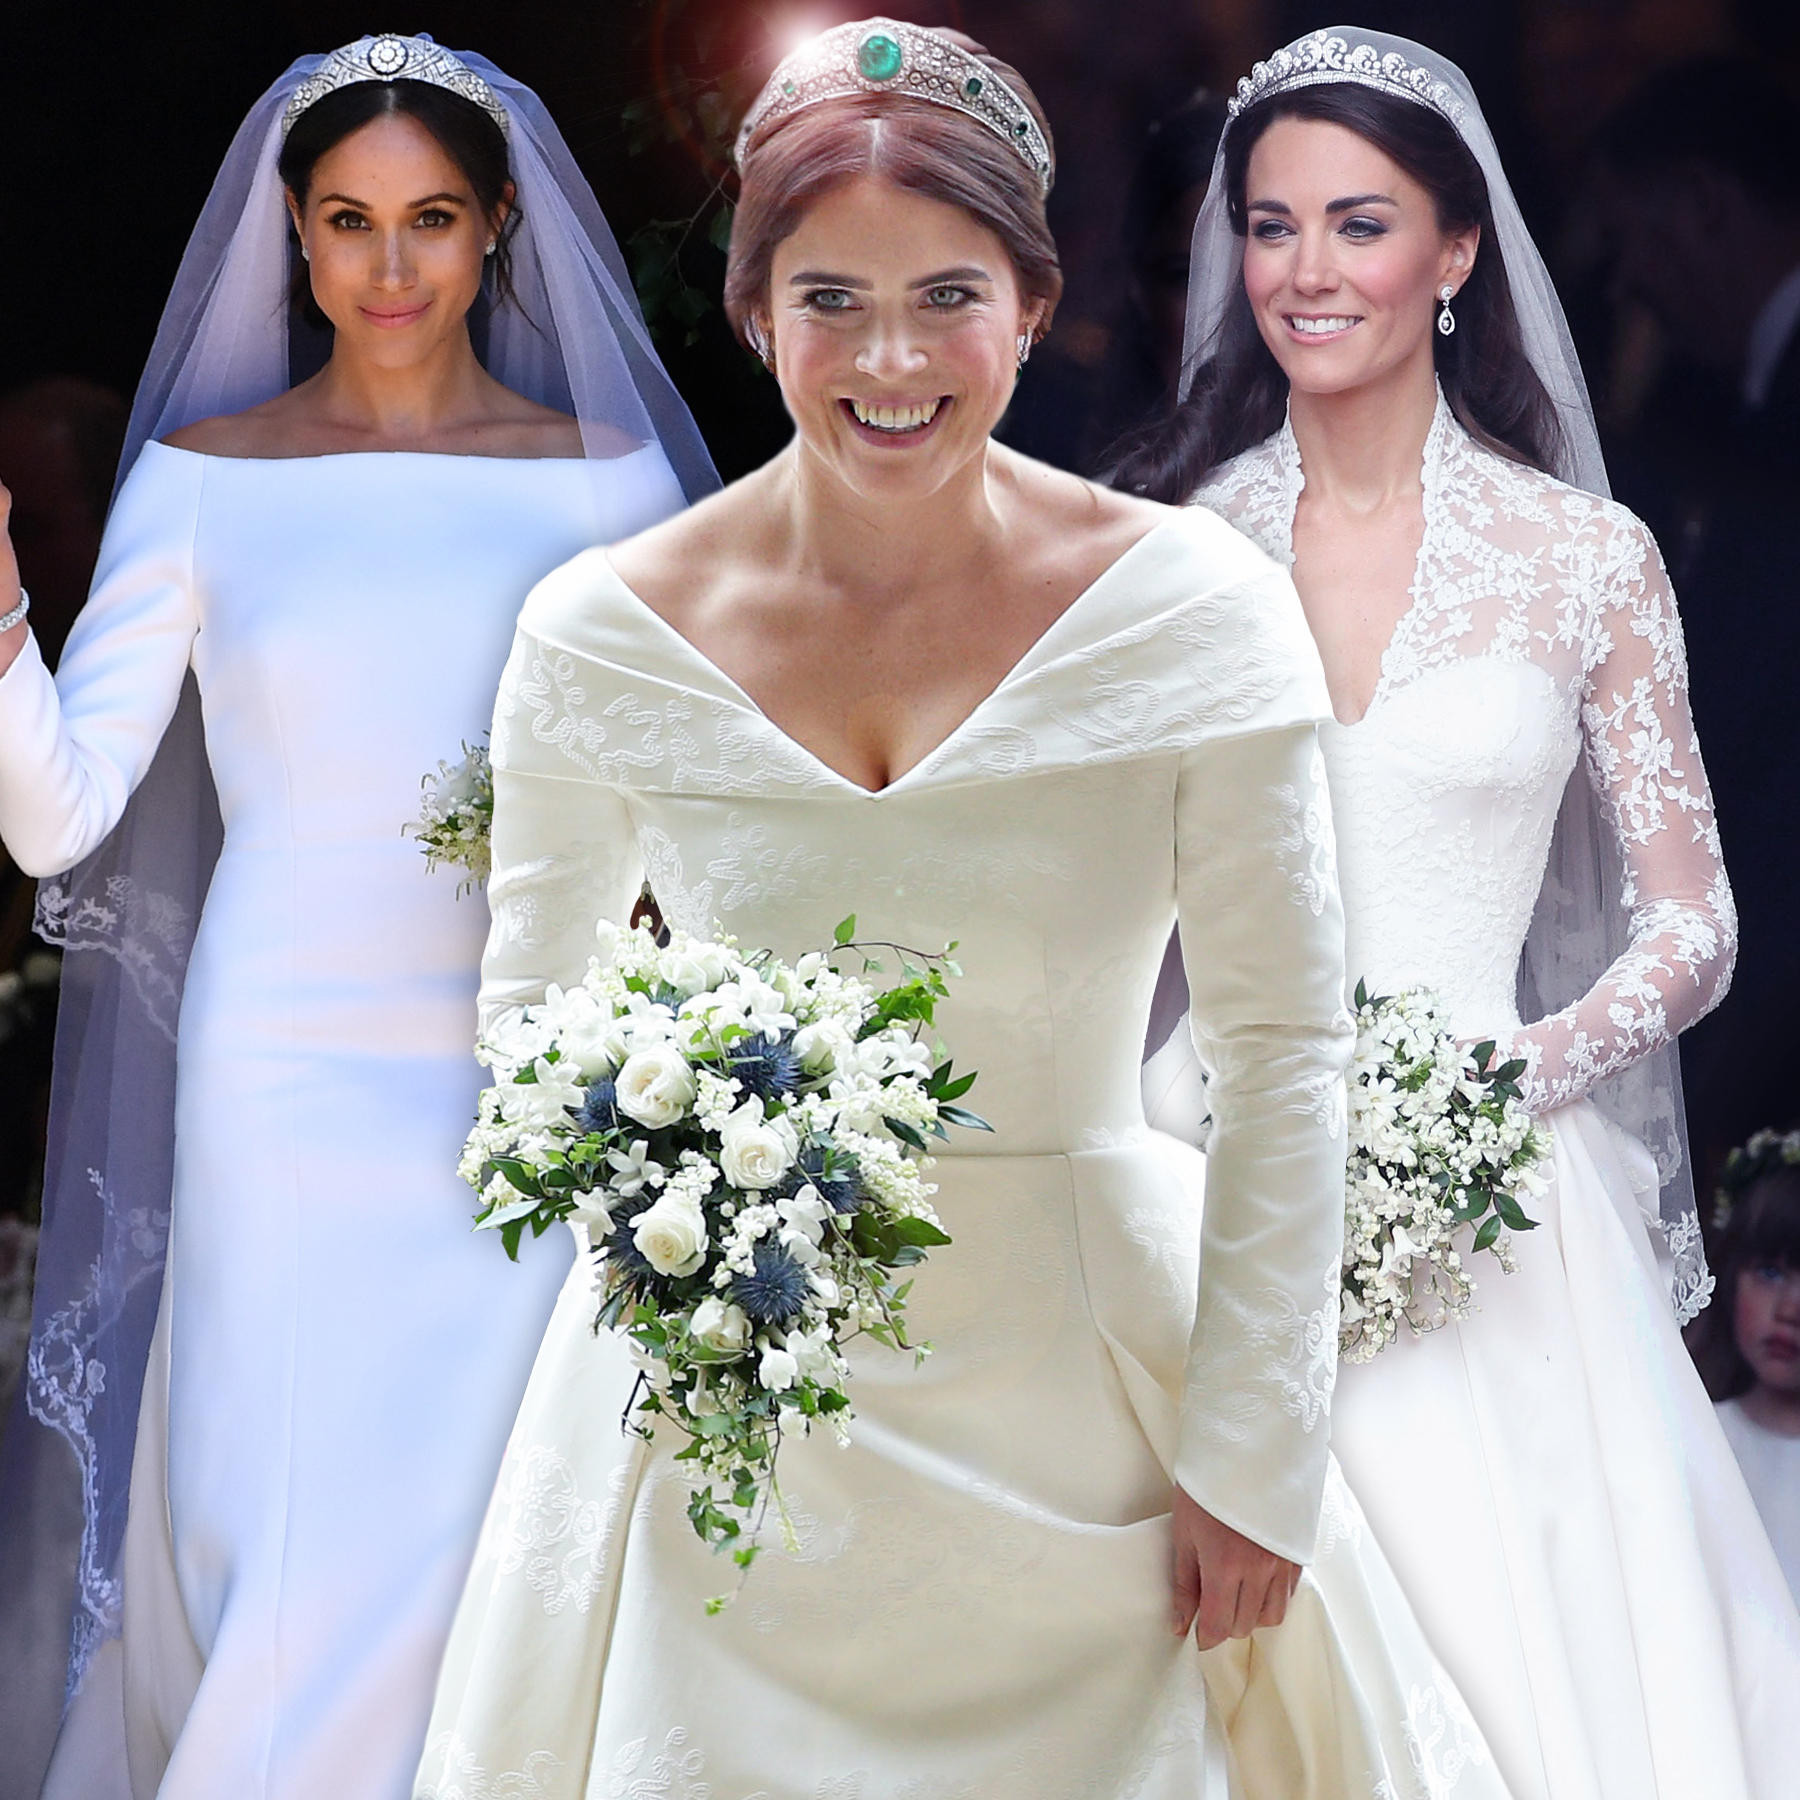 Prinzessin Kate Hochzeitskleid
 Royale Brautkleider Kate Meghan Zara Eugenie welcher